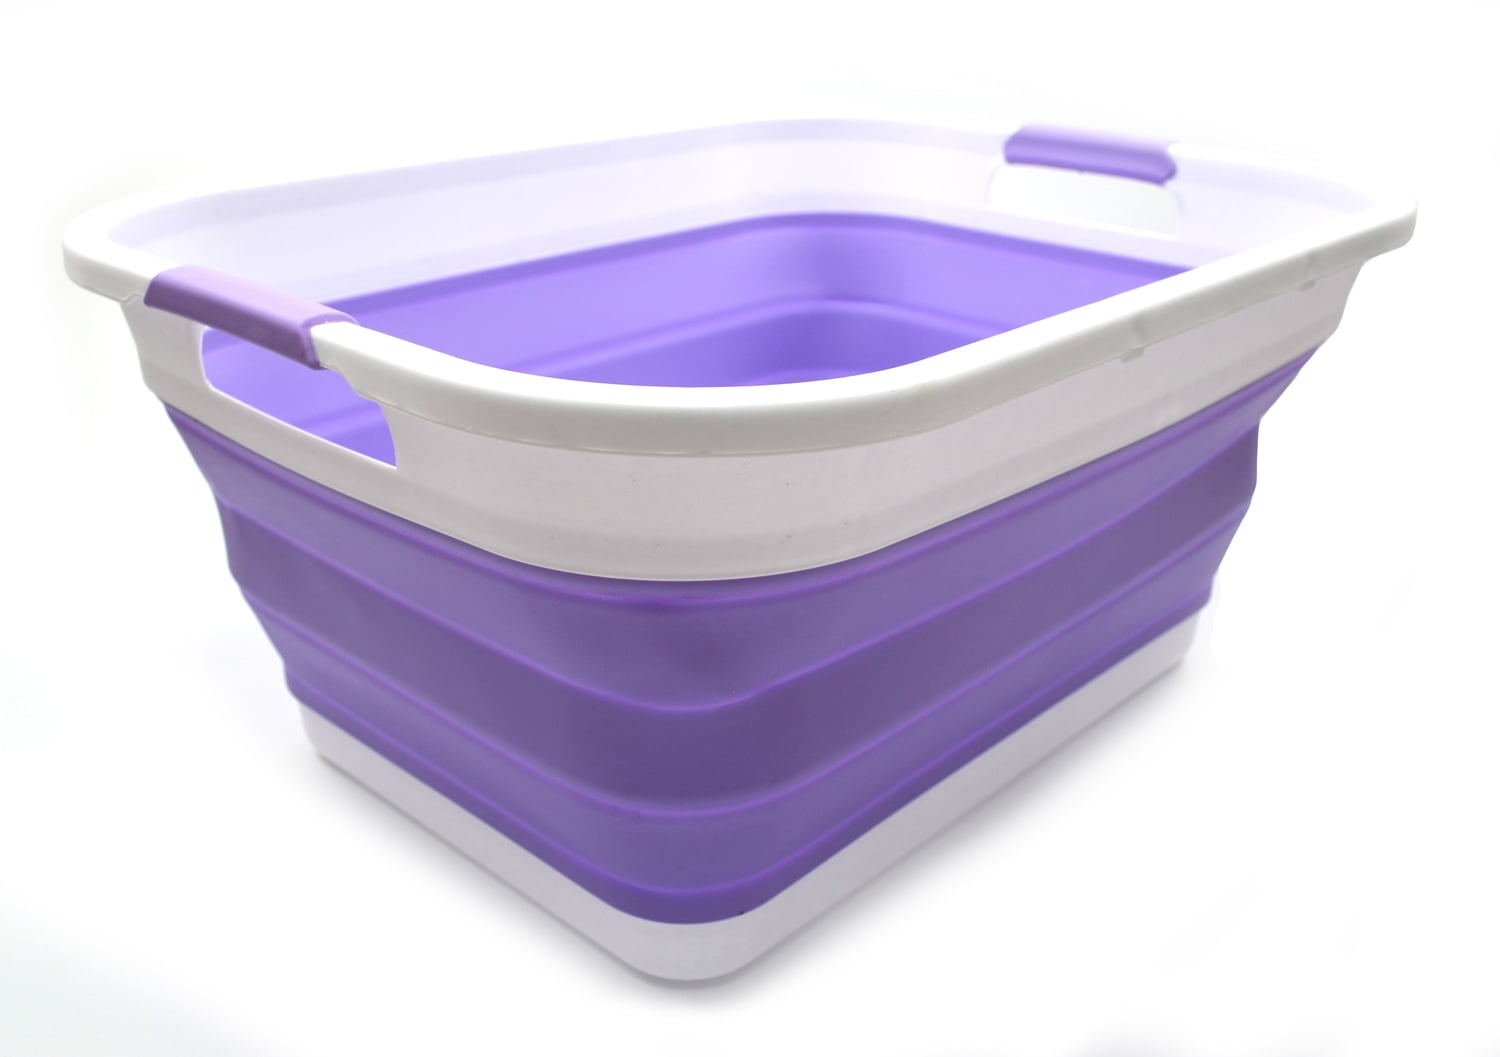 SAMMART Collapsible Plastic Laundry Basket 1, Dark Grey/Black Space Saving Laundry Hamper Foldable Storage Container / Organizer Oval Tub / Basket Portable Washing Tub